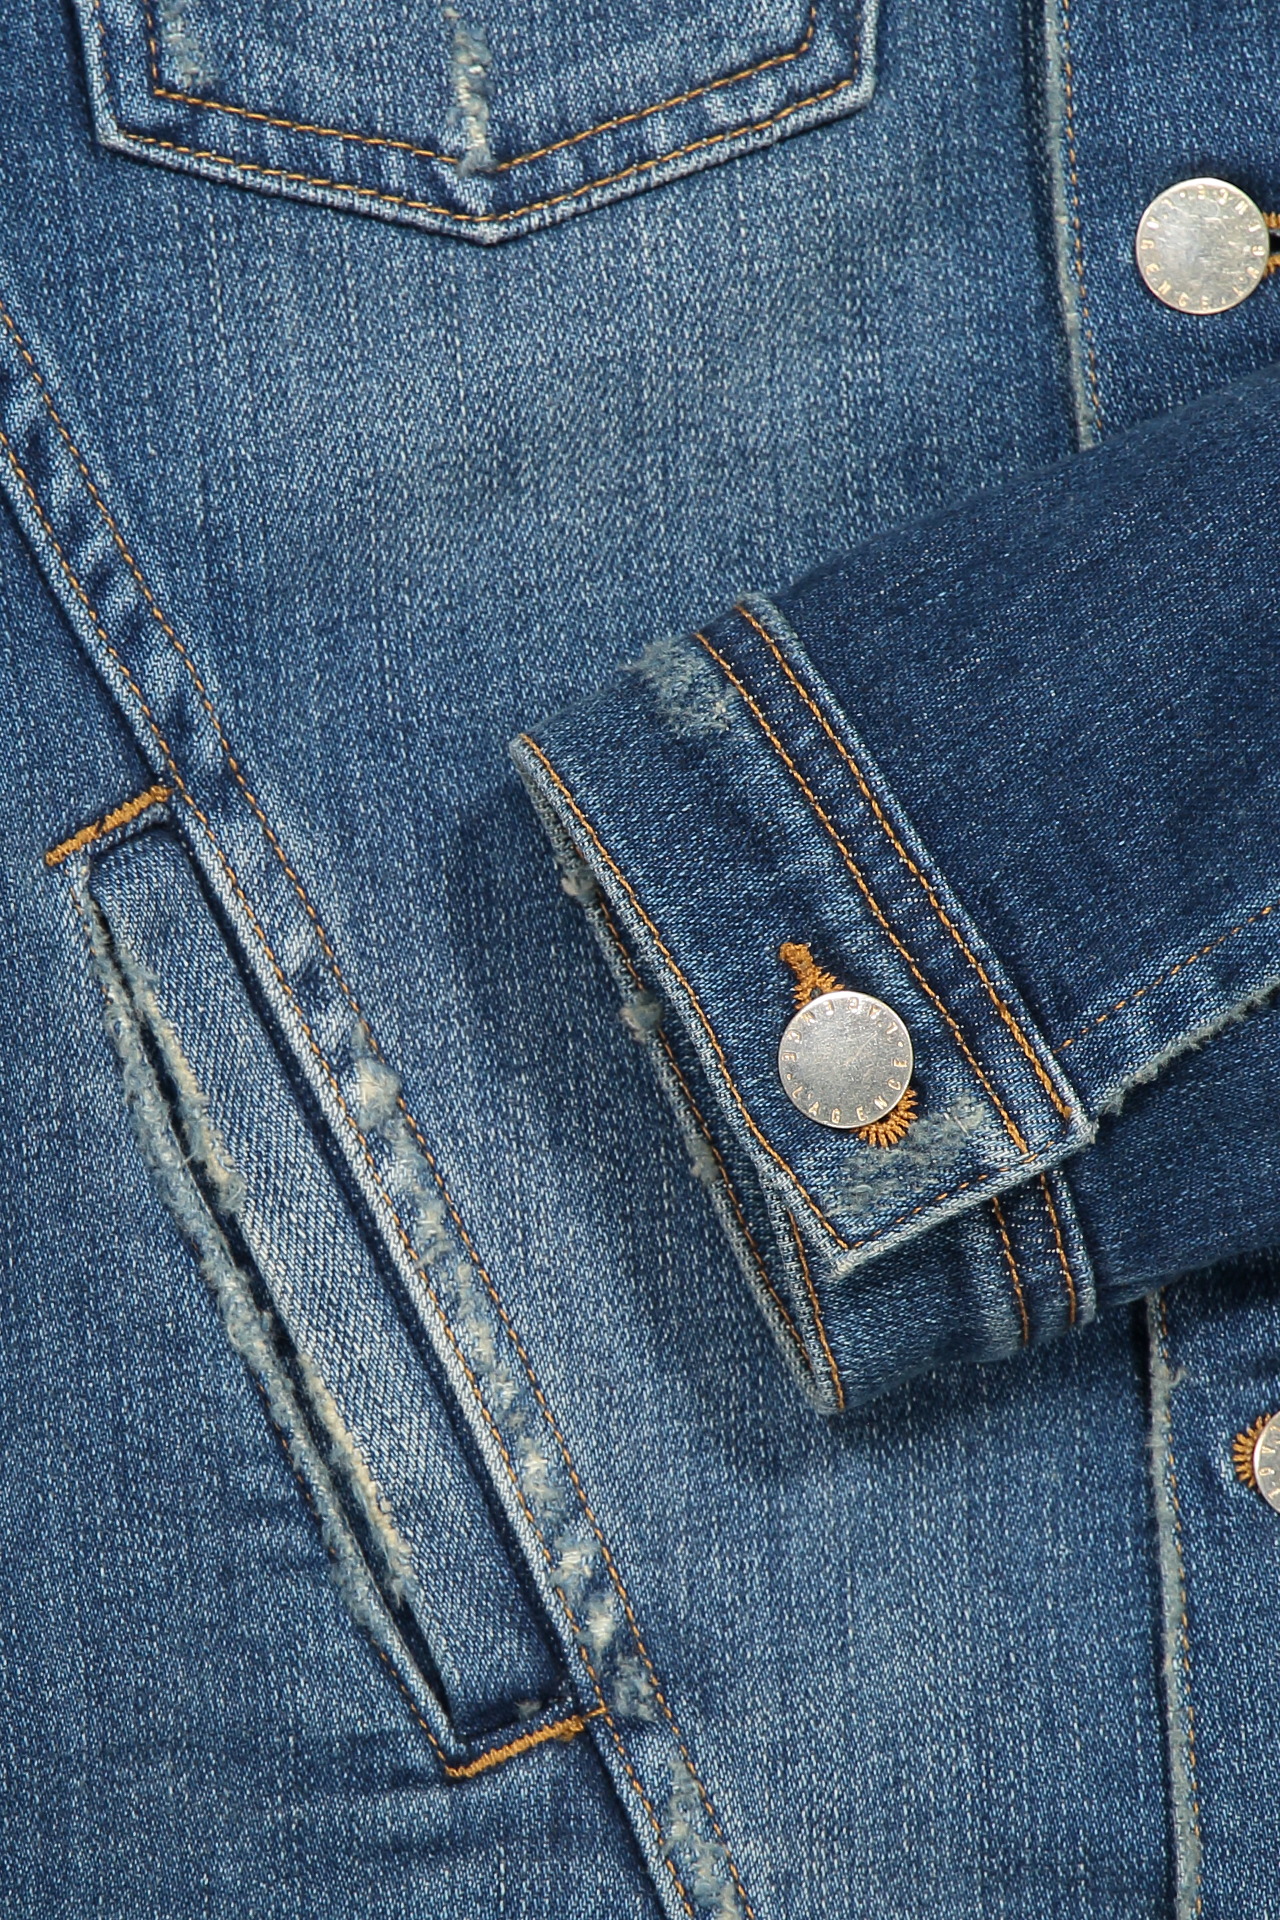 Lagence Celine Denim Jacket Authentique Distressed Cuff Detail Image (600650088459)